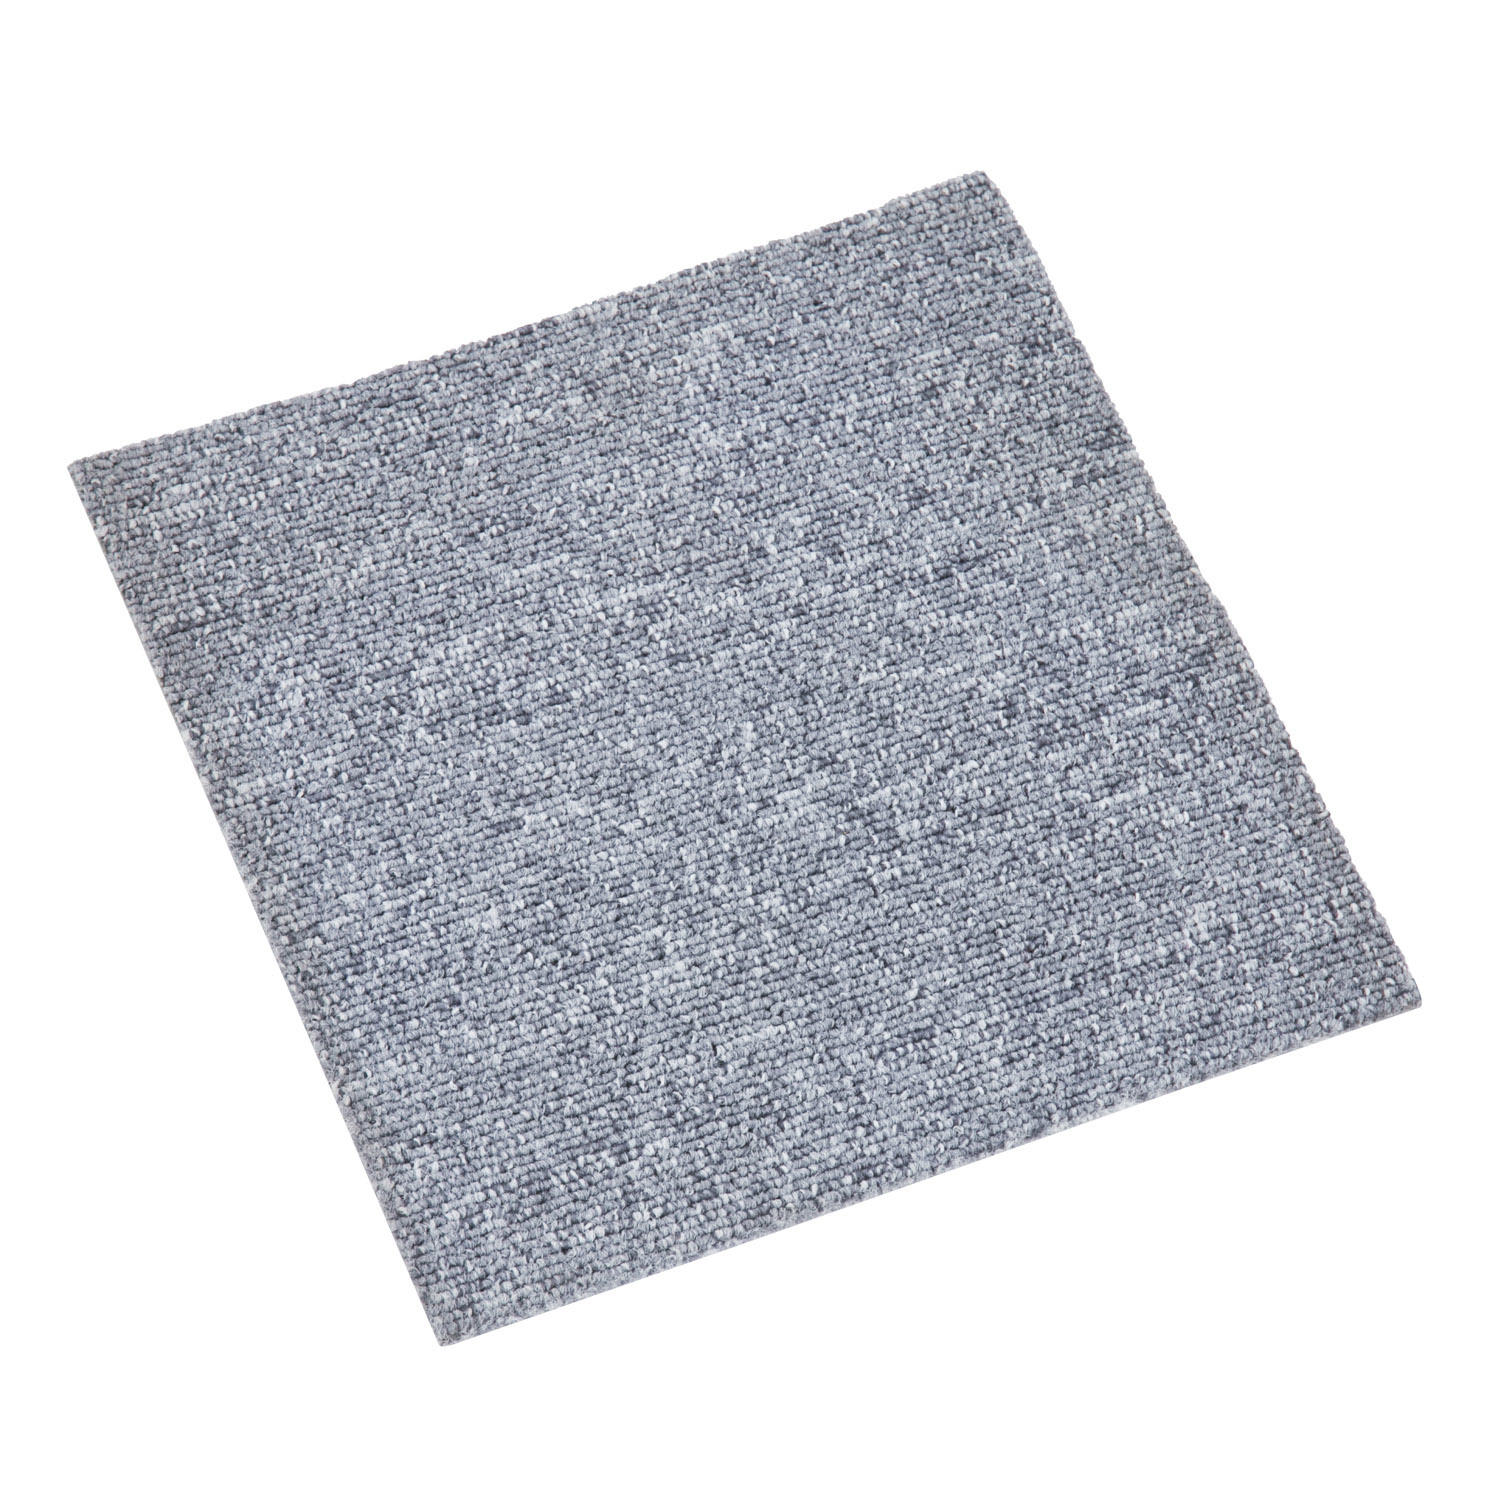 Waterproof Soft Carpet Tiles For Bedroom